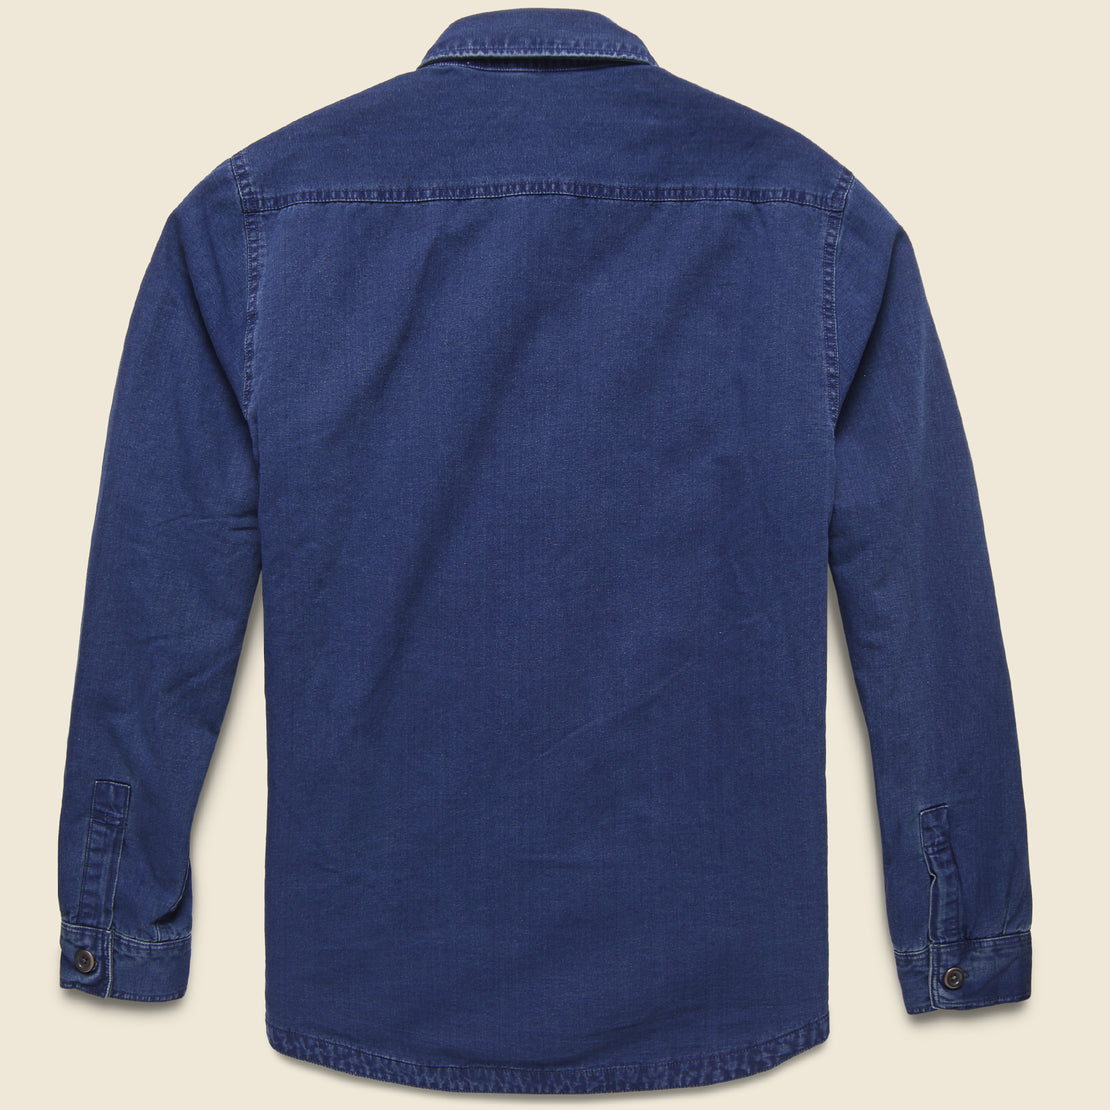 Blanket Lined CPO Shirt Jacket - Indigo